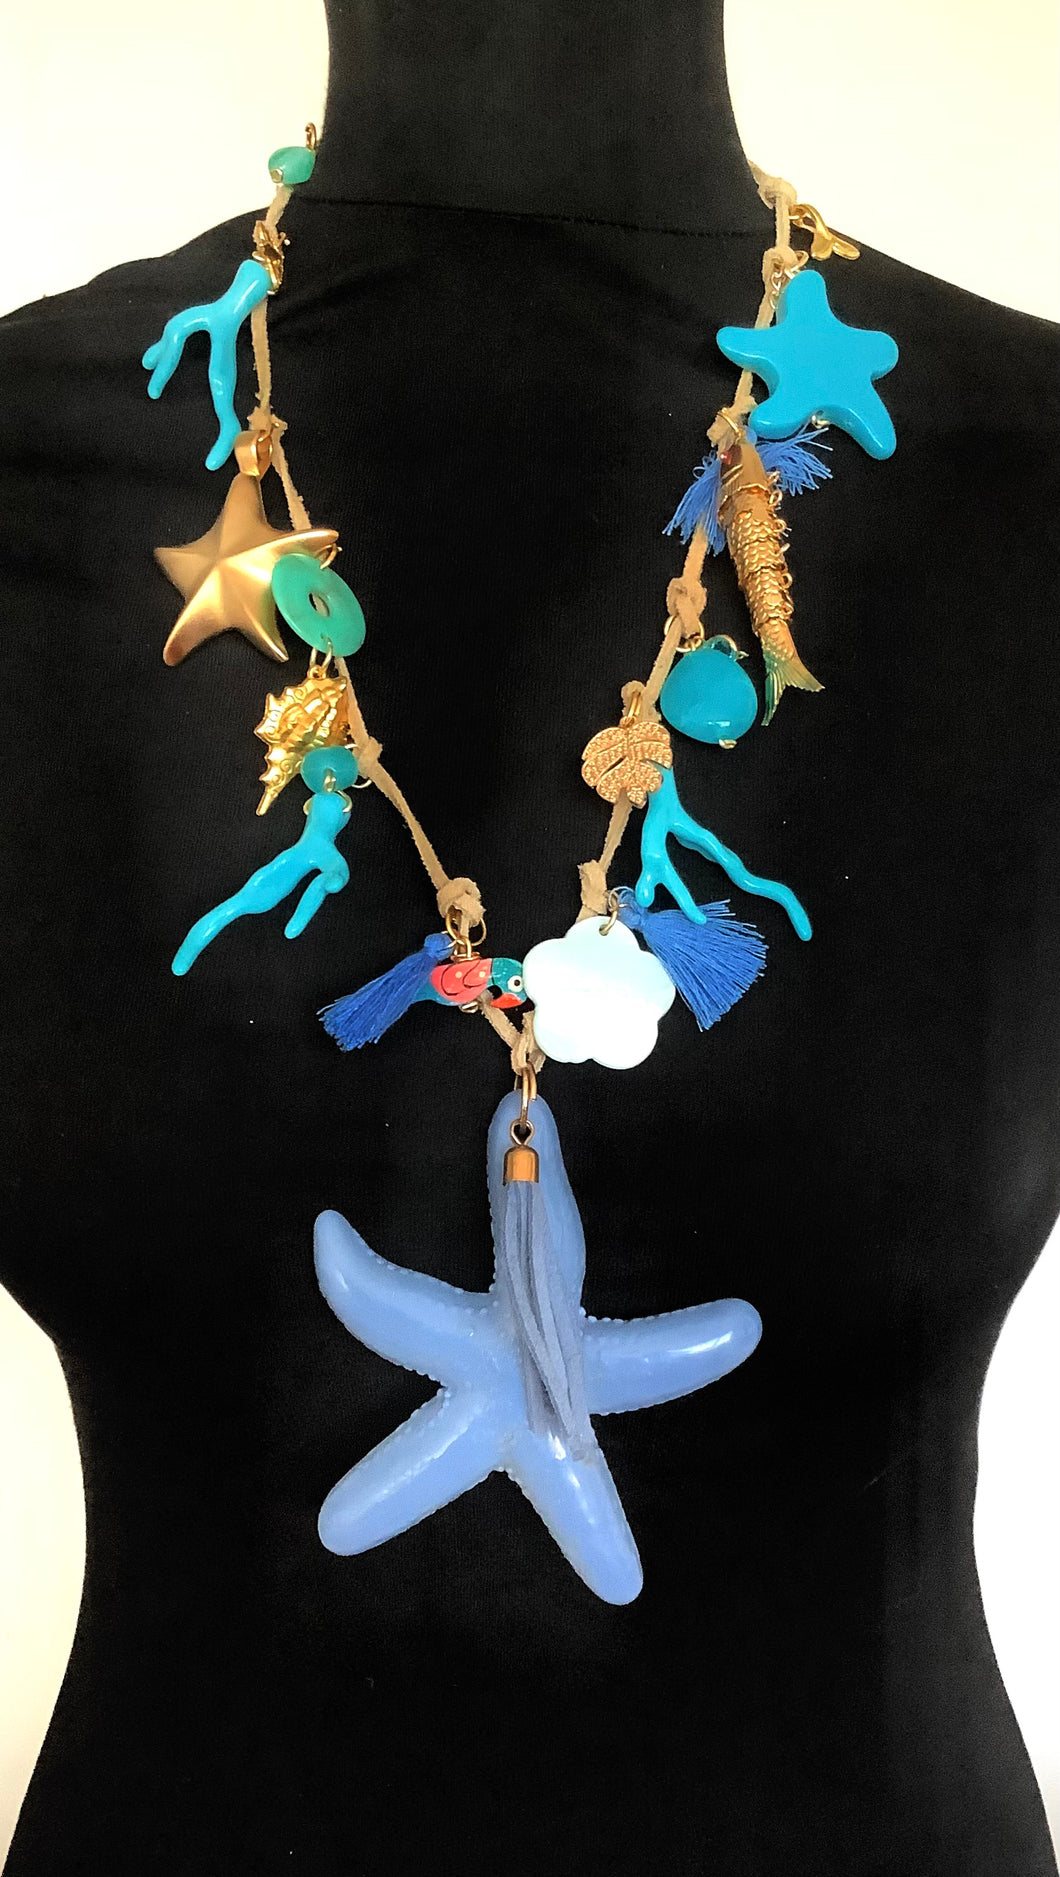 Blue Starfish Boho Charm Necklace